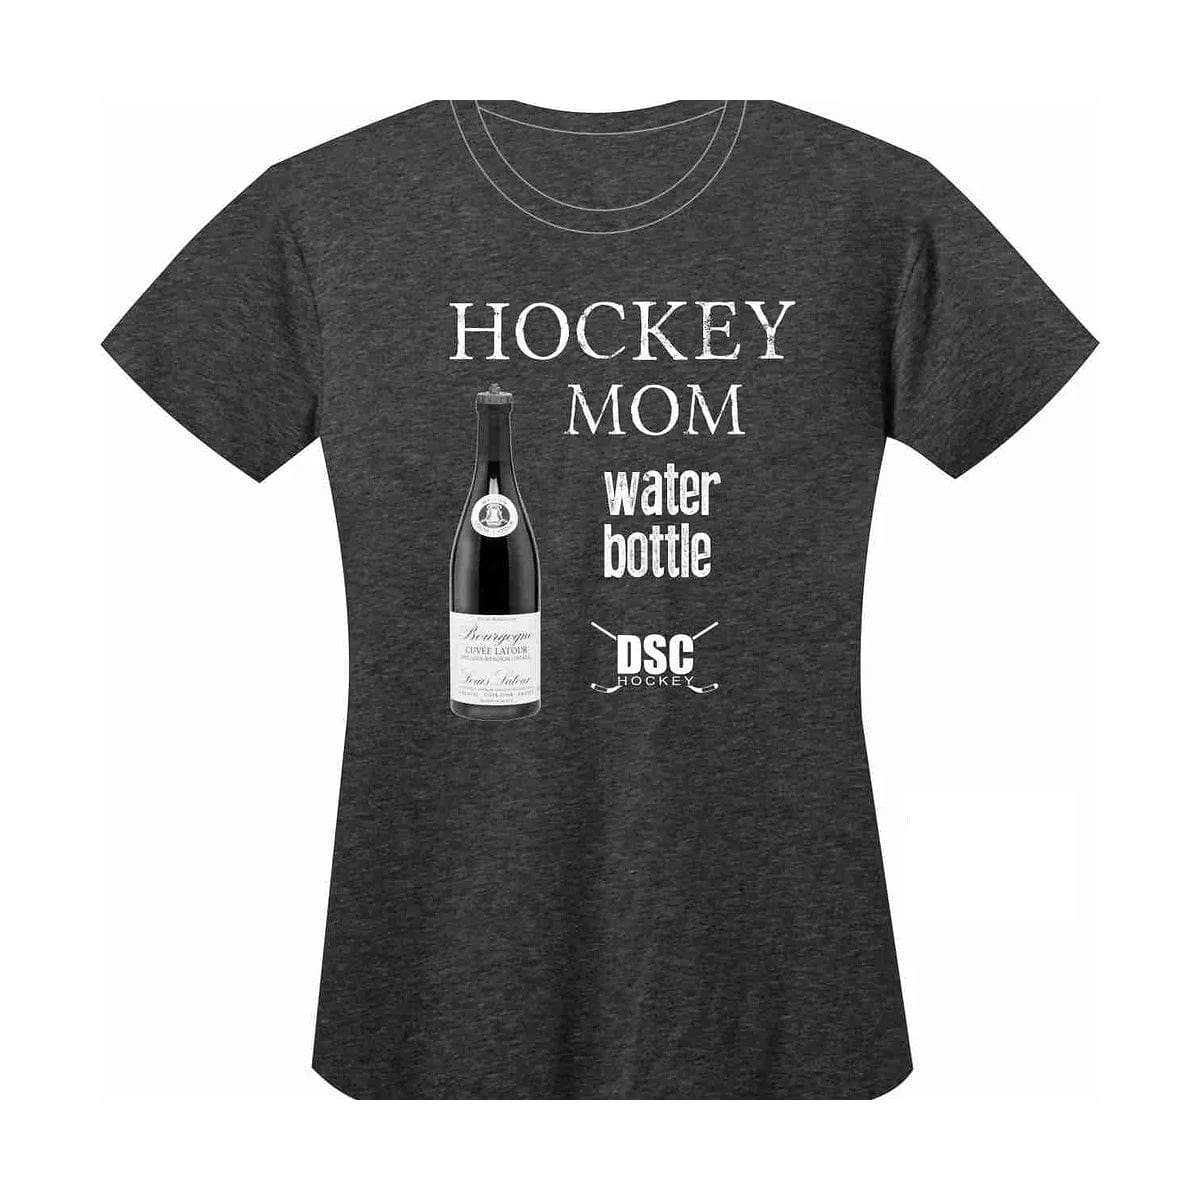 DSC Hockey Water Bottle Womens Shirt - The Hockey Shop Source For Sports